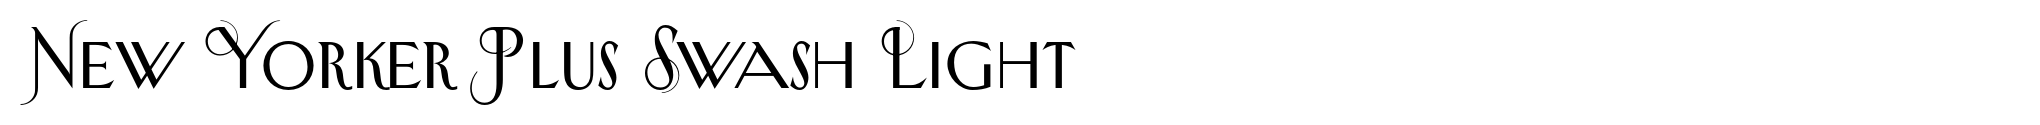 New Yorker Plus Swash Light image